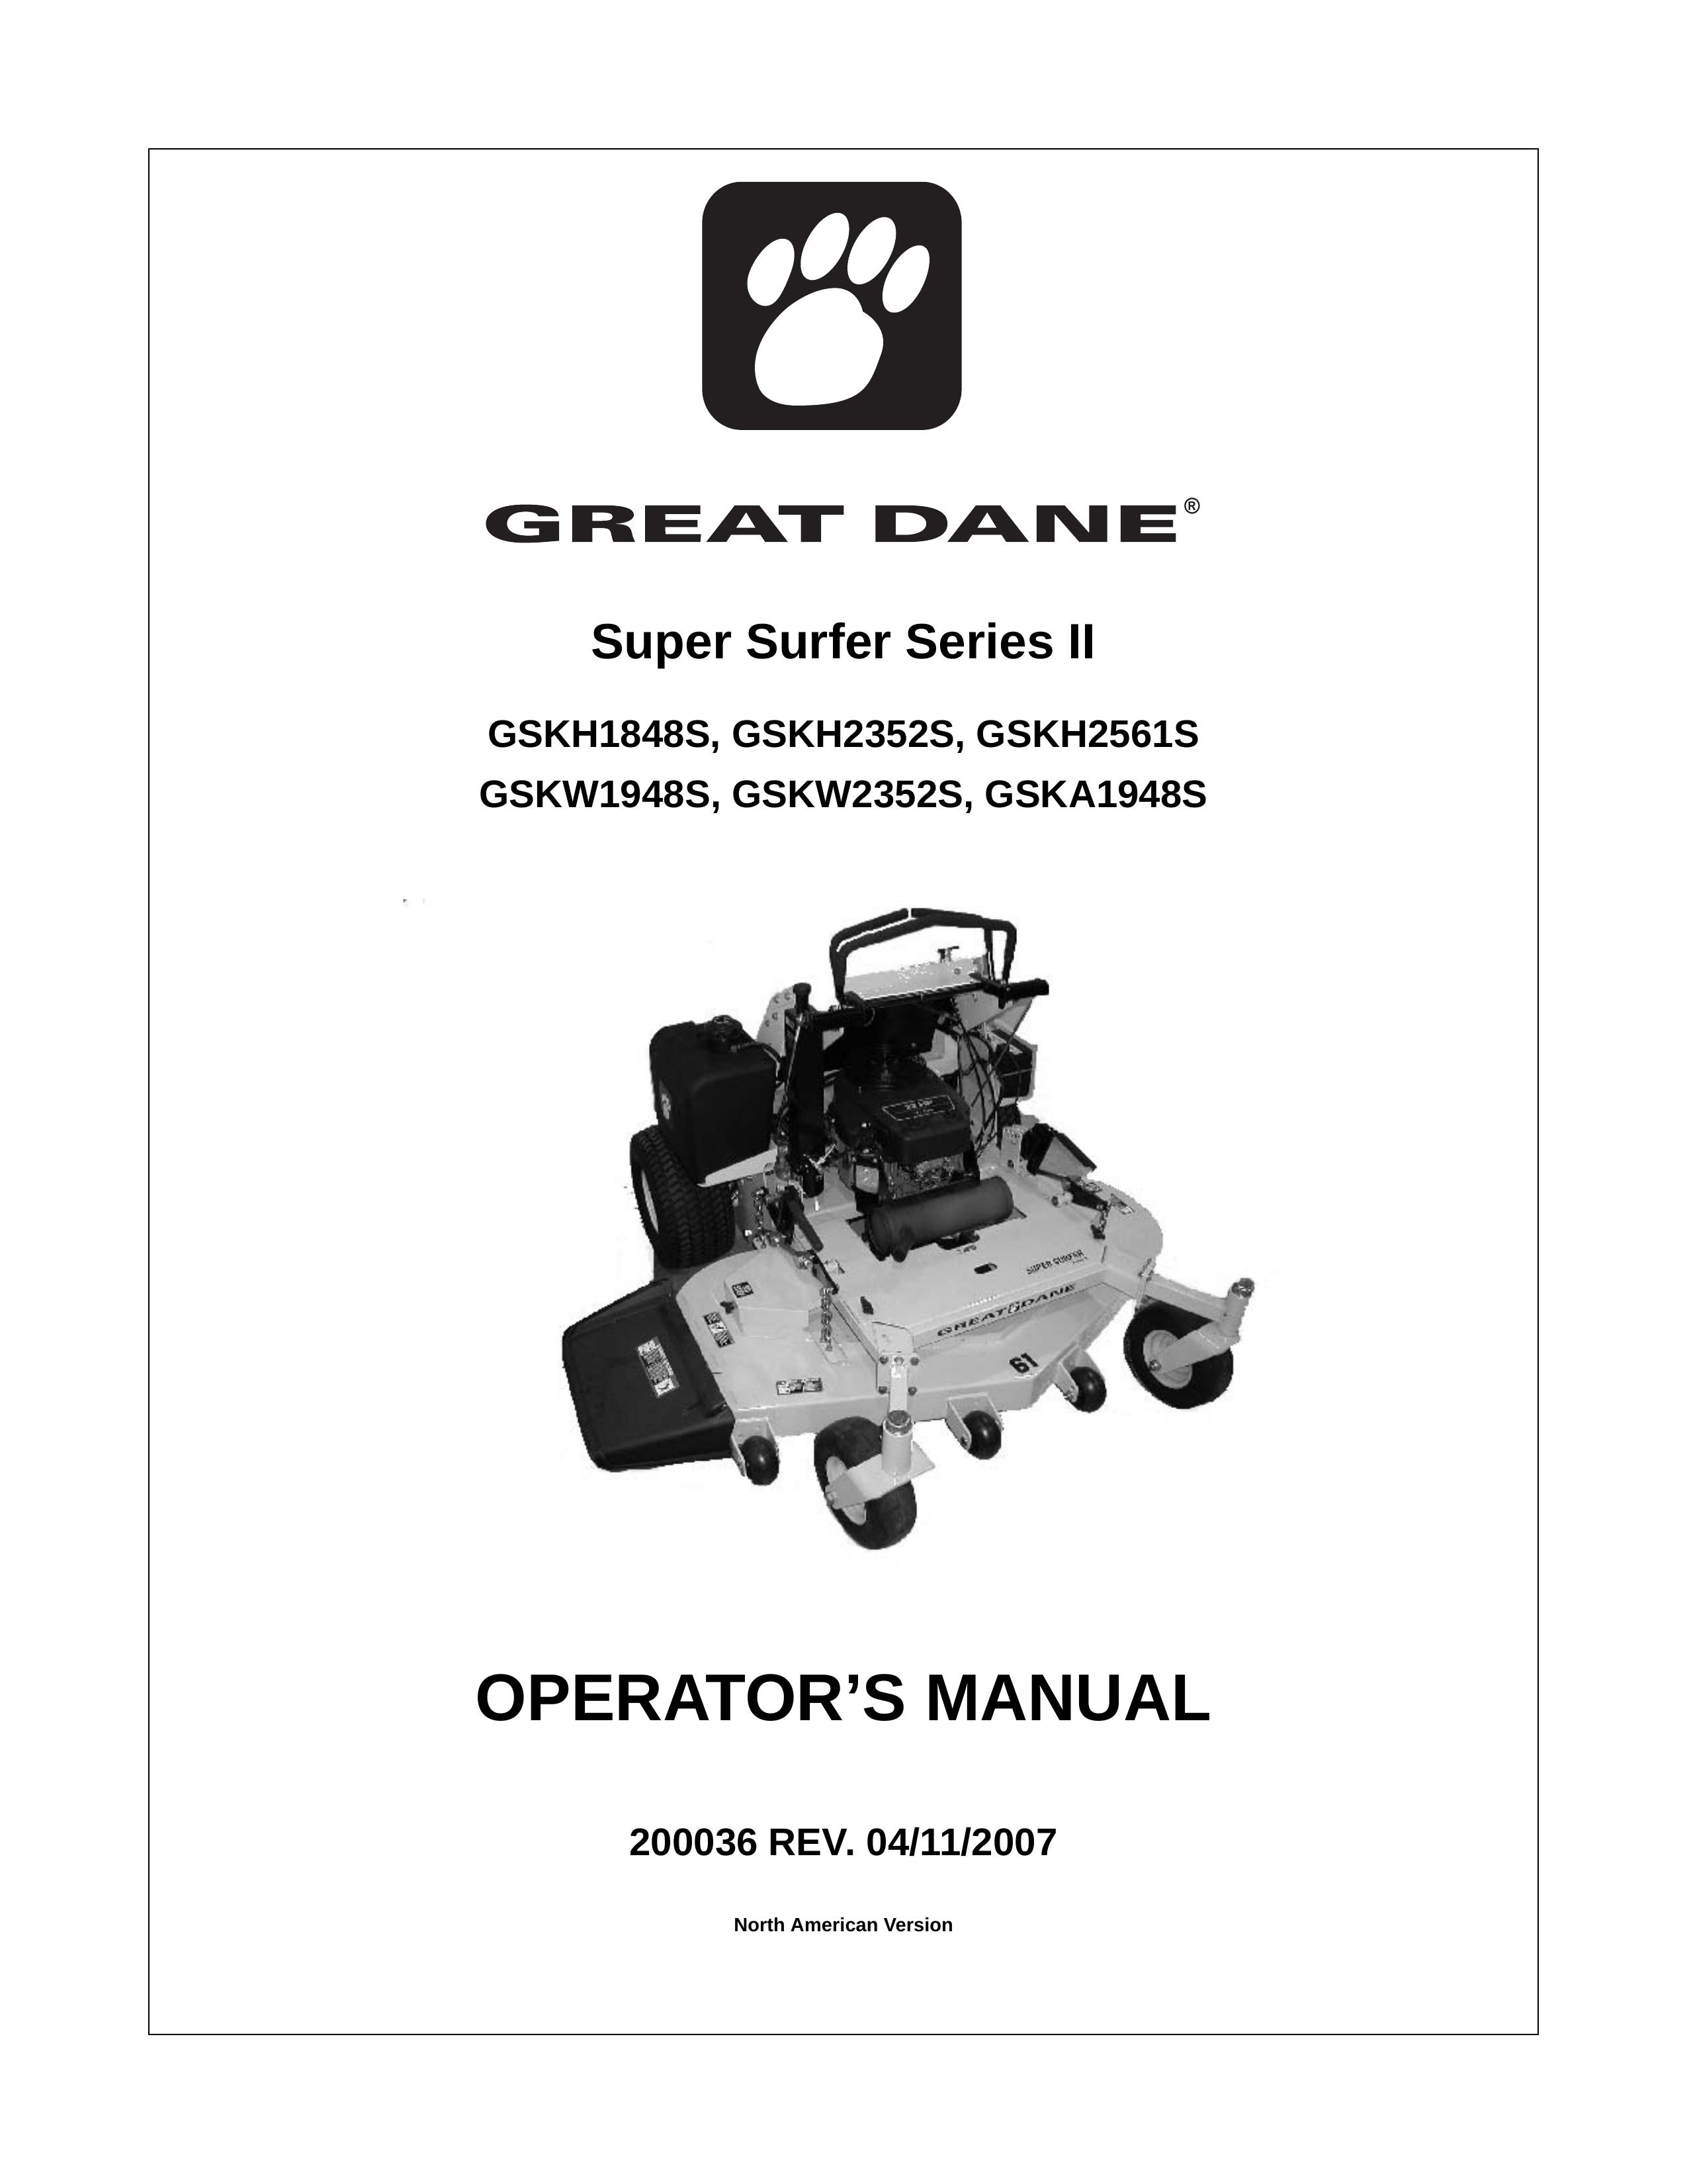 Great Dane GSKW2352S Lawn Mower User Manual